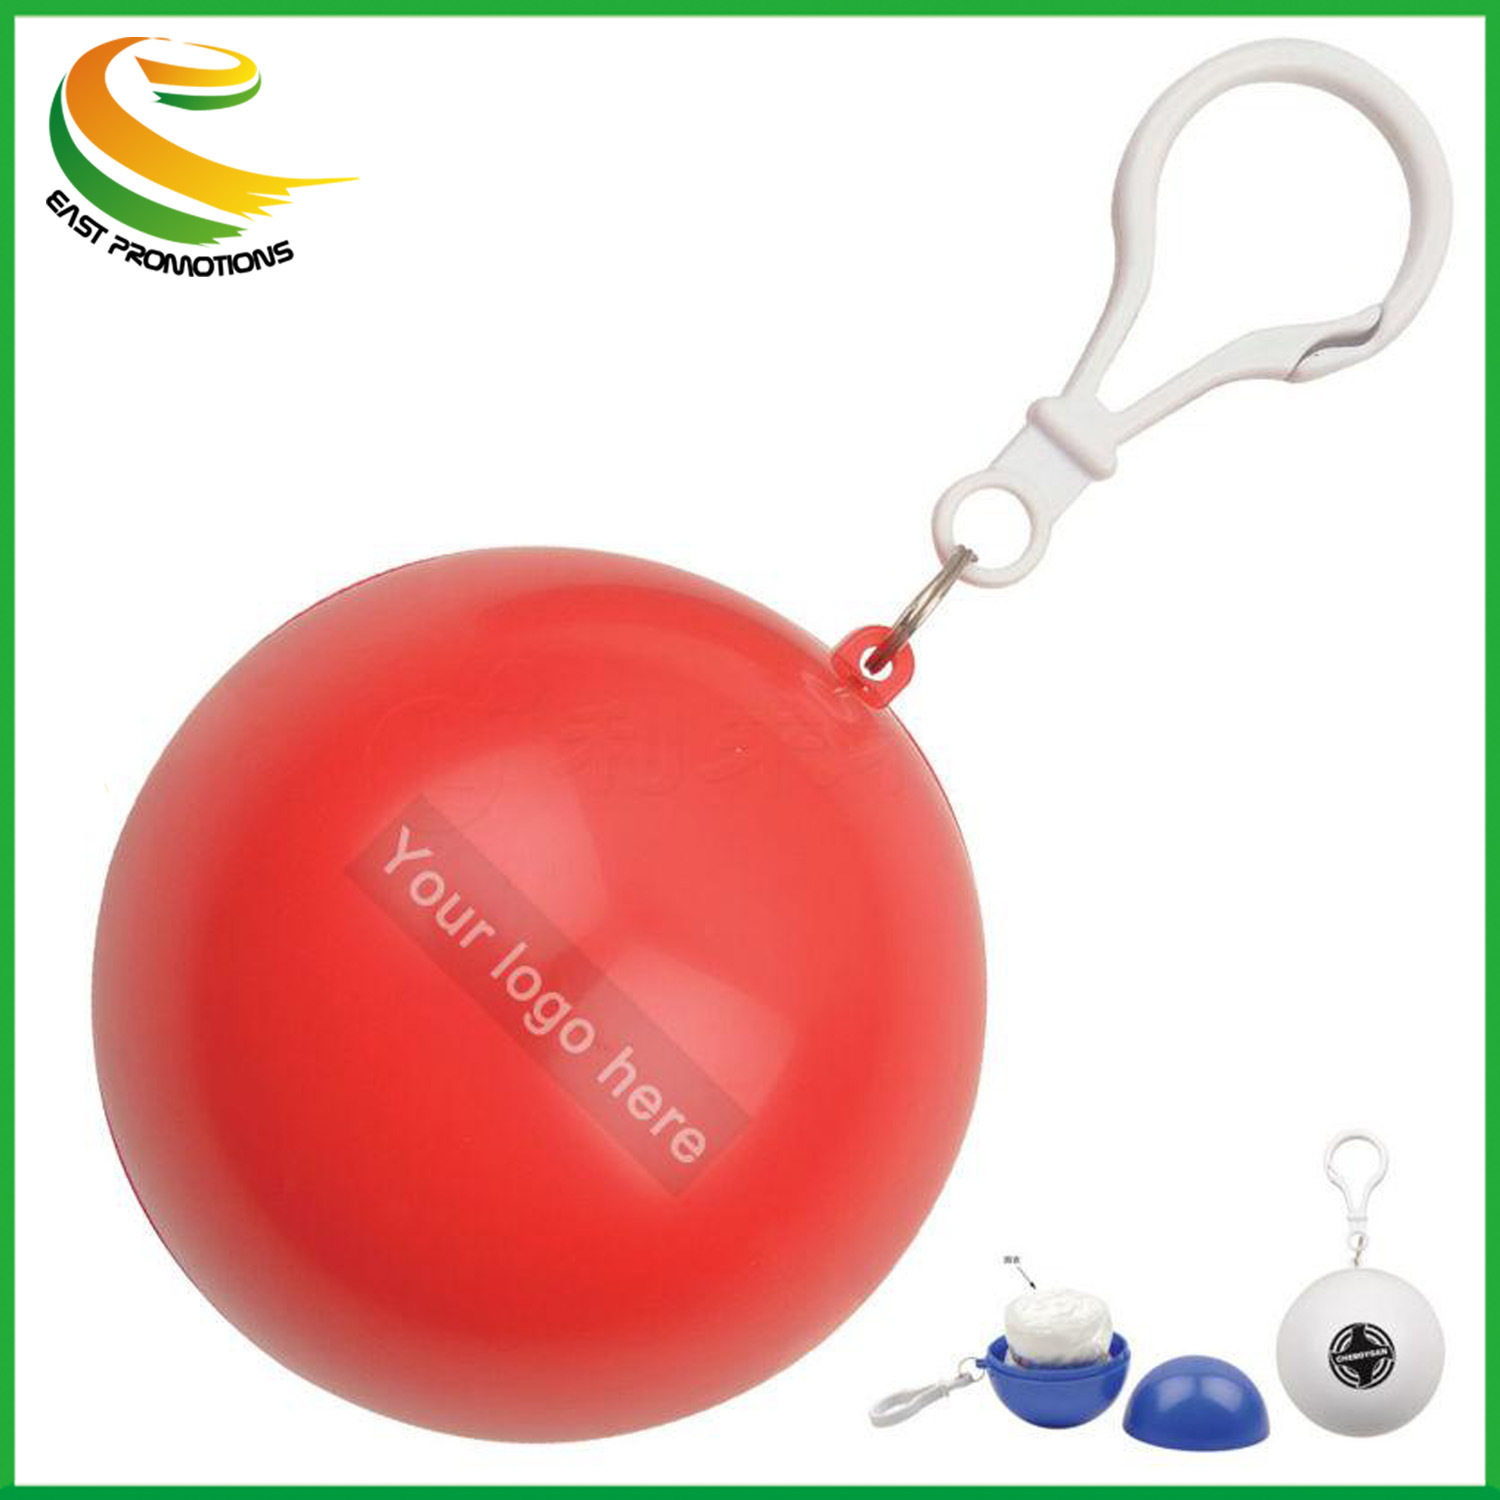 Mini Portable Ball Shape Promotional Raincoat Keychain